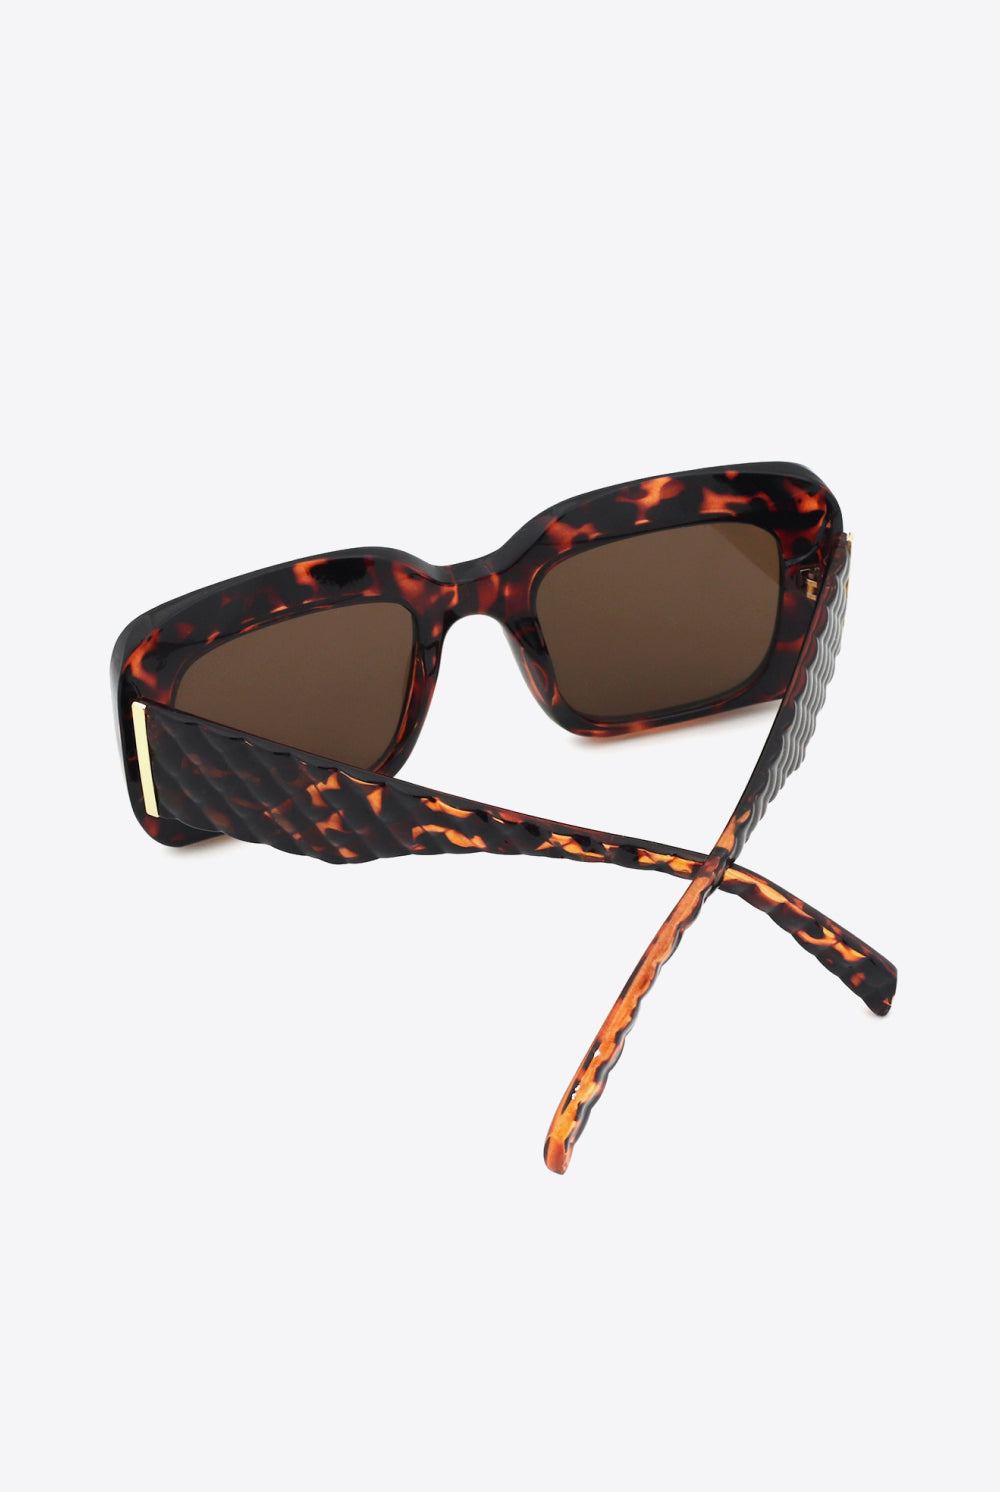 White Smoke Square Polycarbonate UV400 Sunglasses Sunglasses